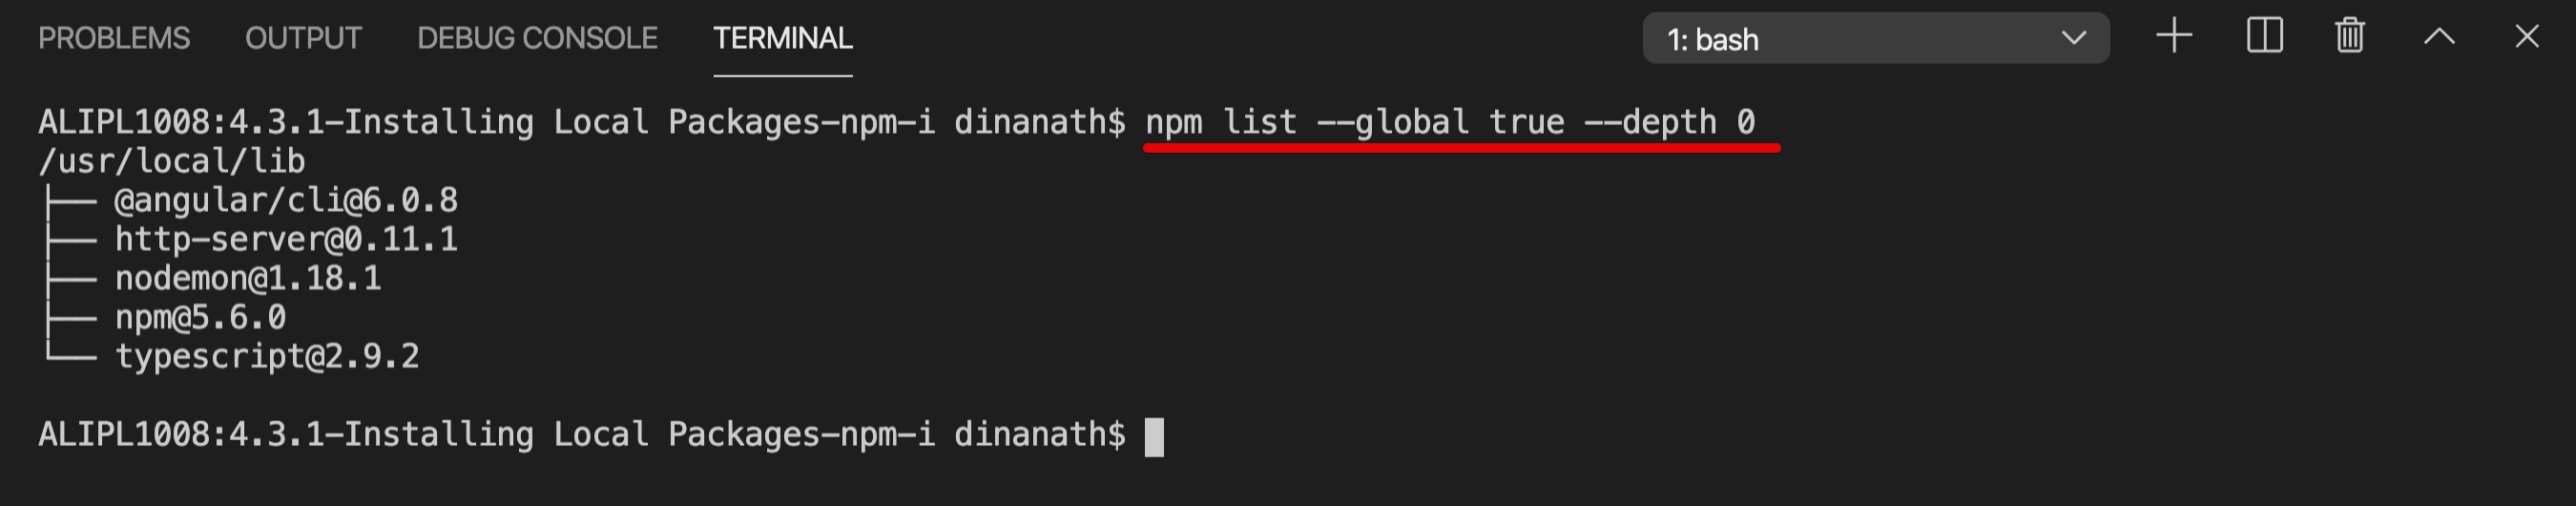 NPM List Depth 0 : npm list --global true --depth 0